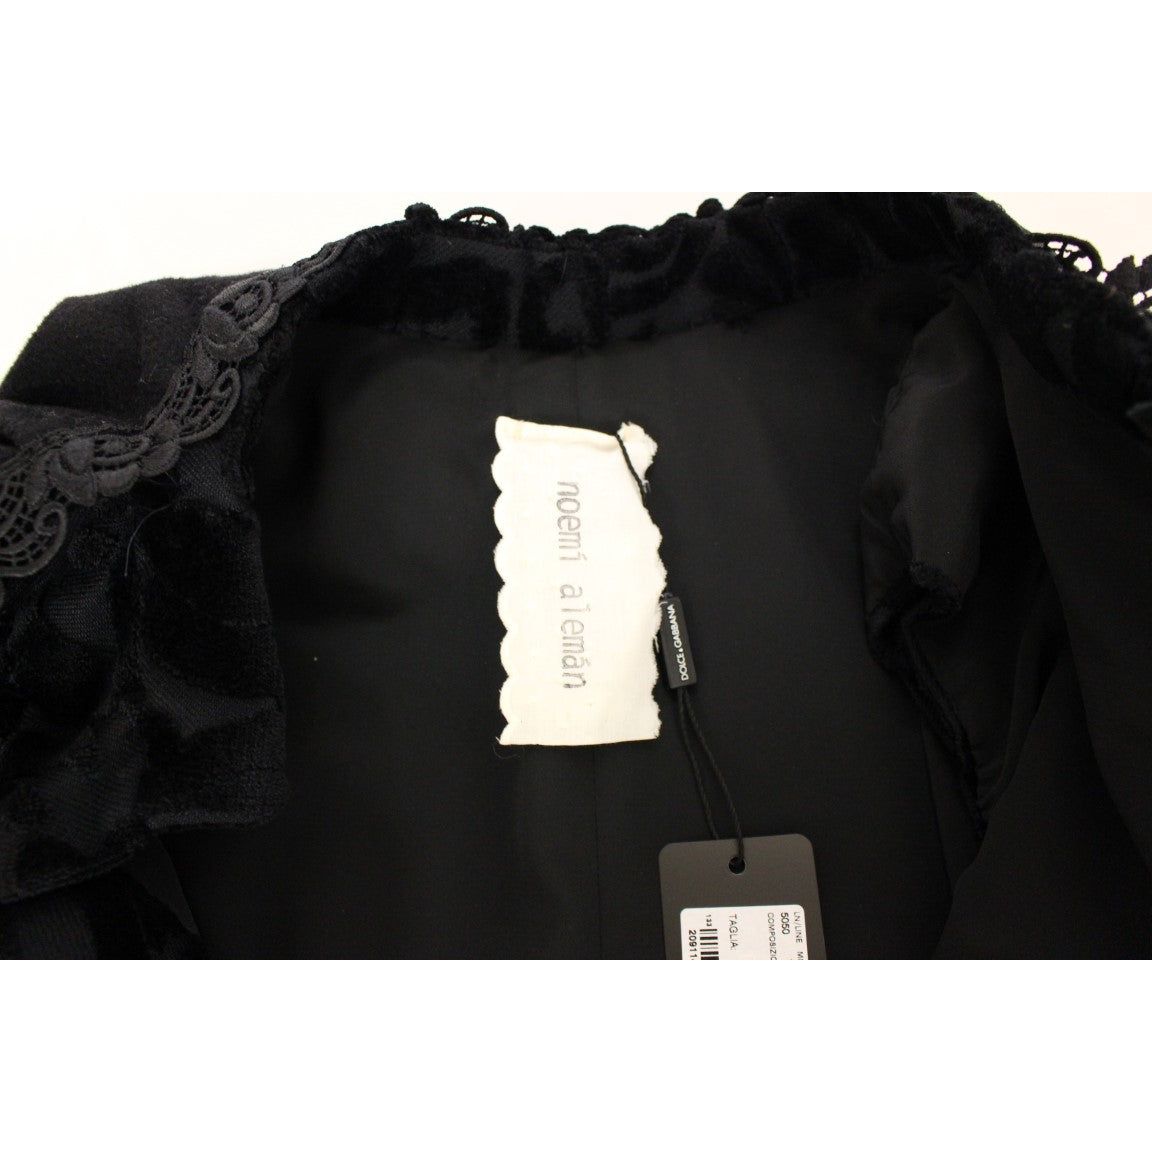 NOEMI ALEMÁN Elegant Black Brocade Cape Coat Jacket Coats & Jackets black-cotton-brocade-long-cape-coat-jacket 220586-black-cotton-brocade-long-cape-coat-jacket-8.jpg